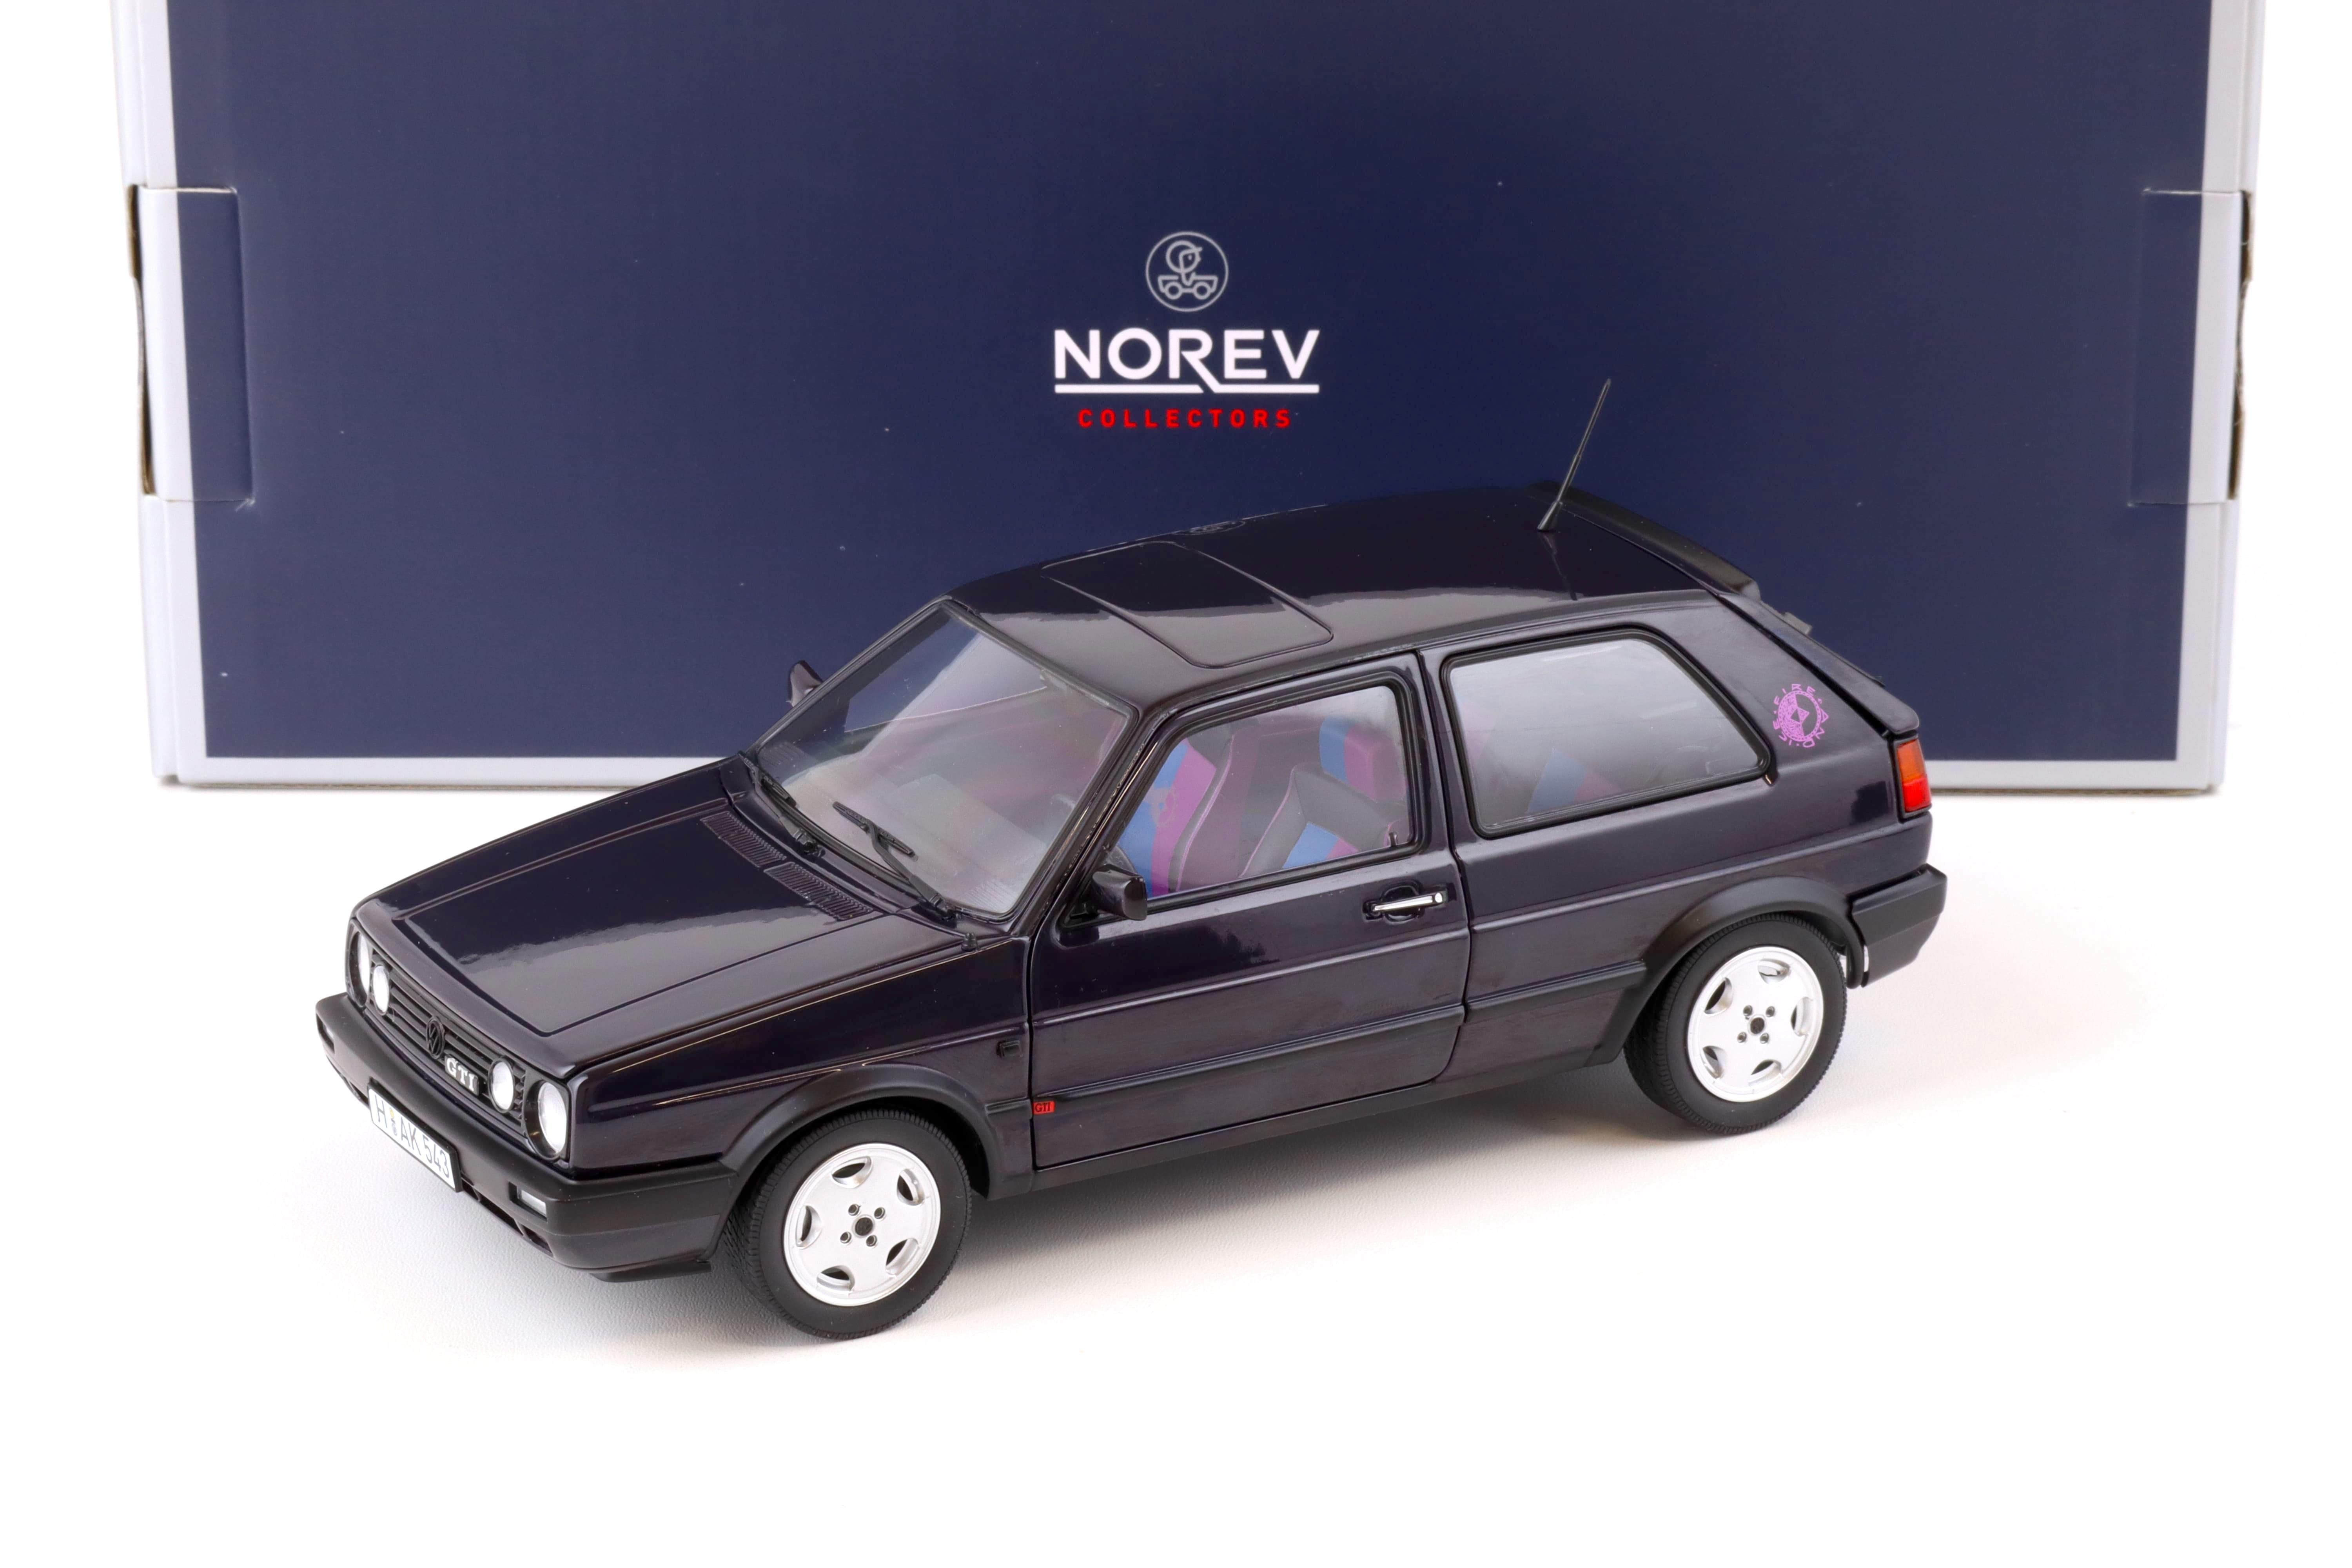 1:18 Norev VW Golf 2 GTI Fire and Ice 1991 purple metallic